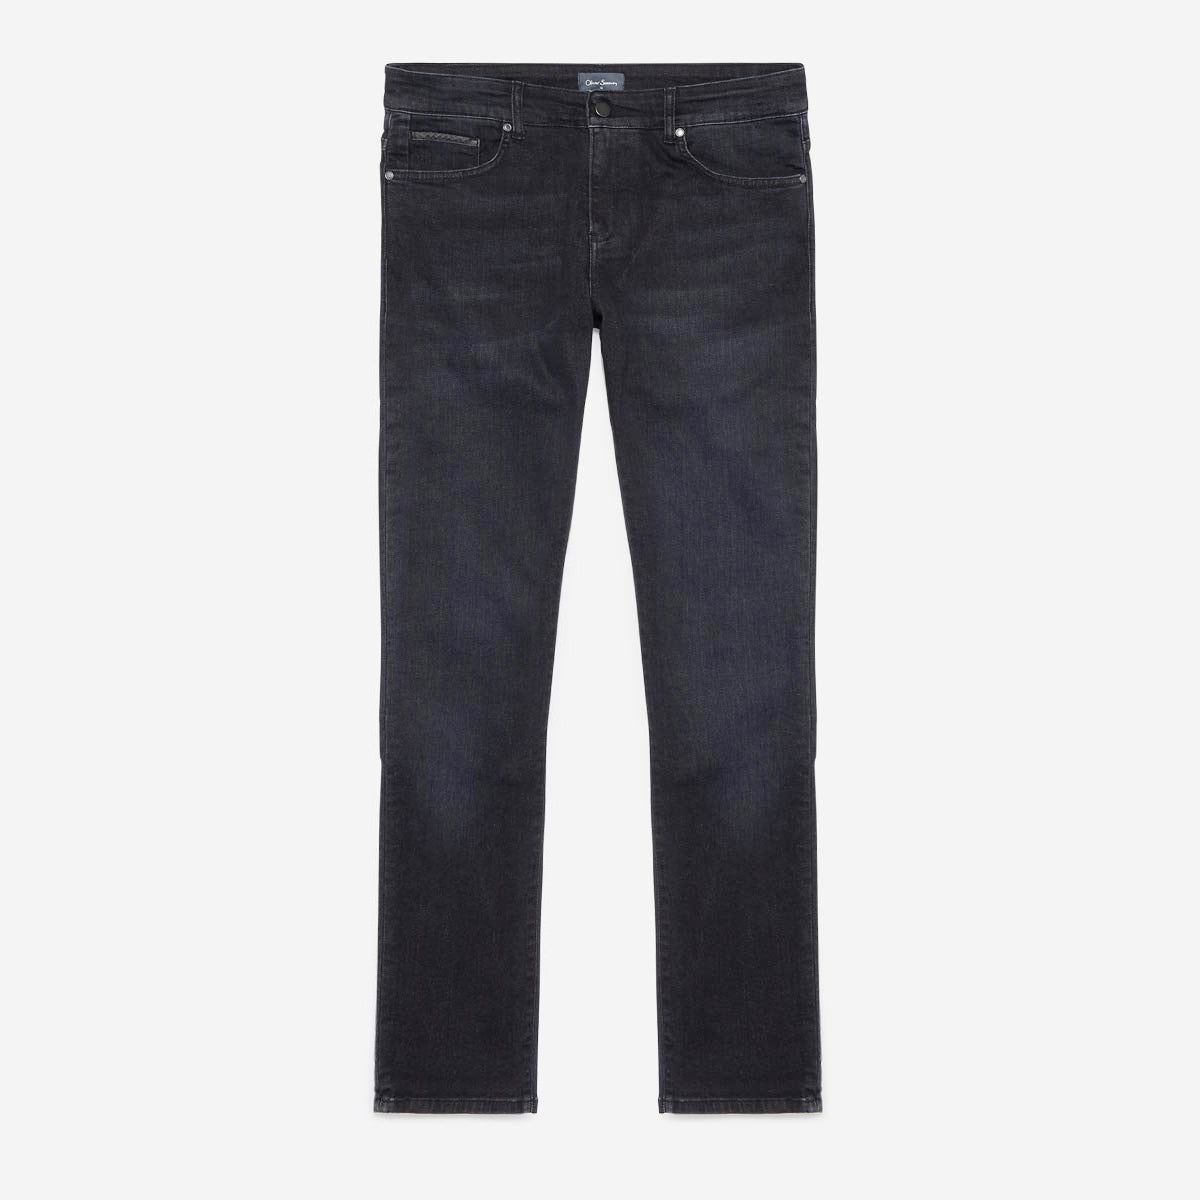 Navigli Charcoal Jeans | Men's Denim Jeans | Oliver Sweeney